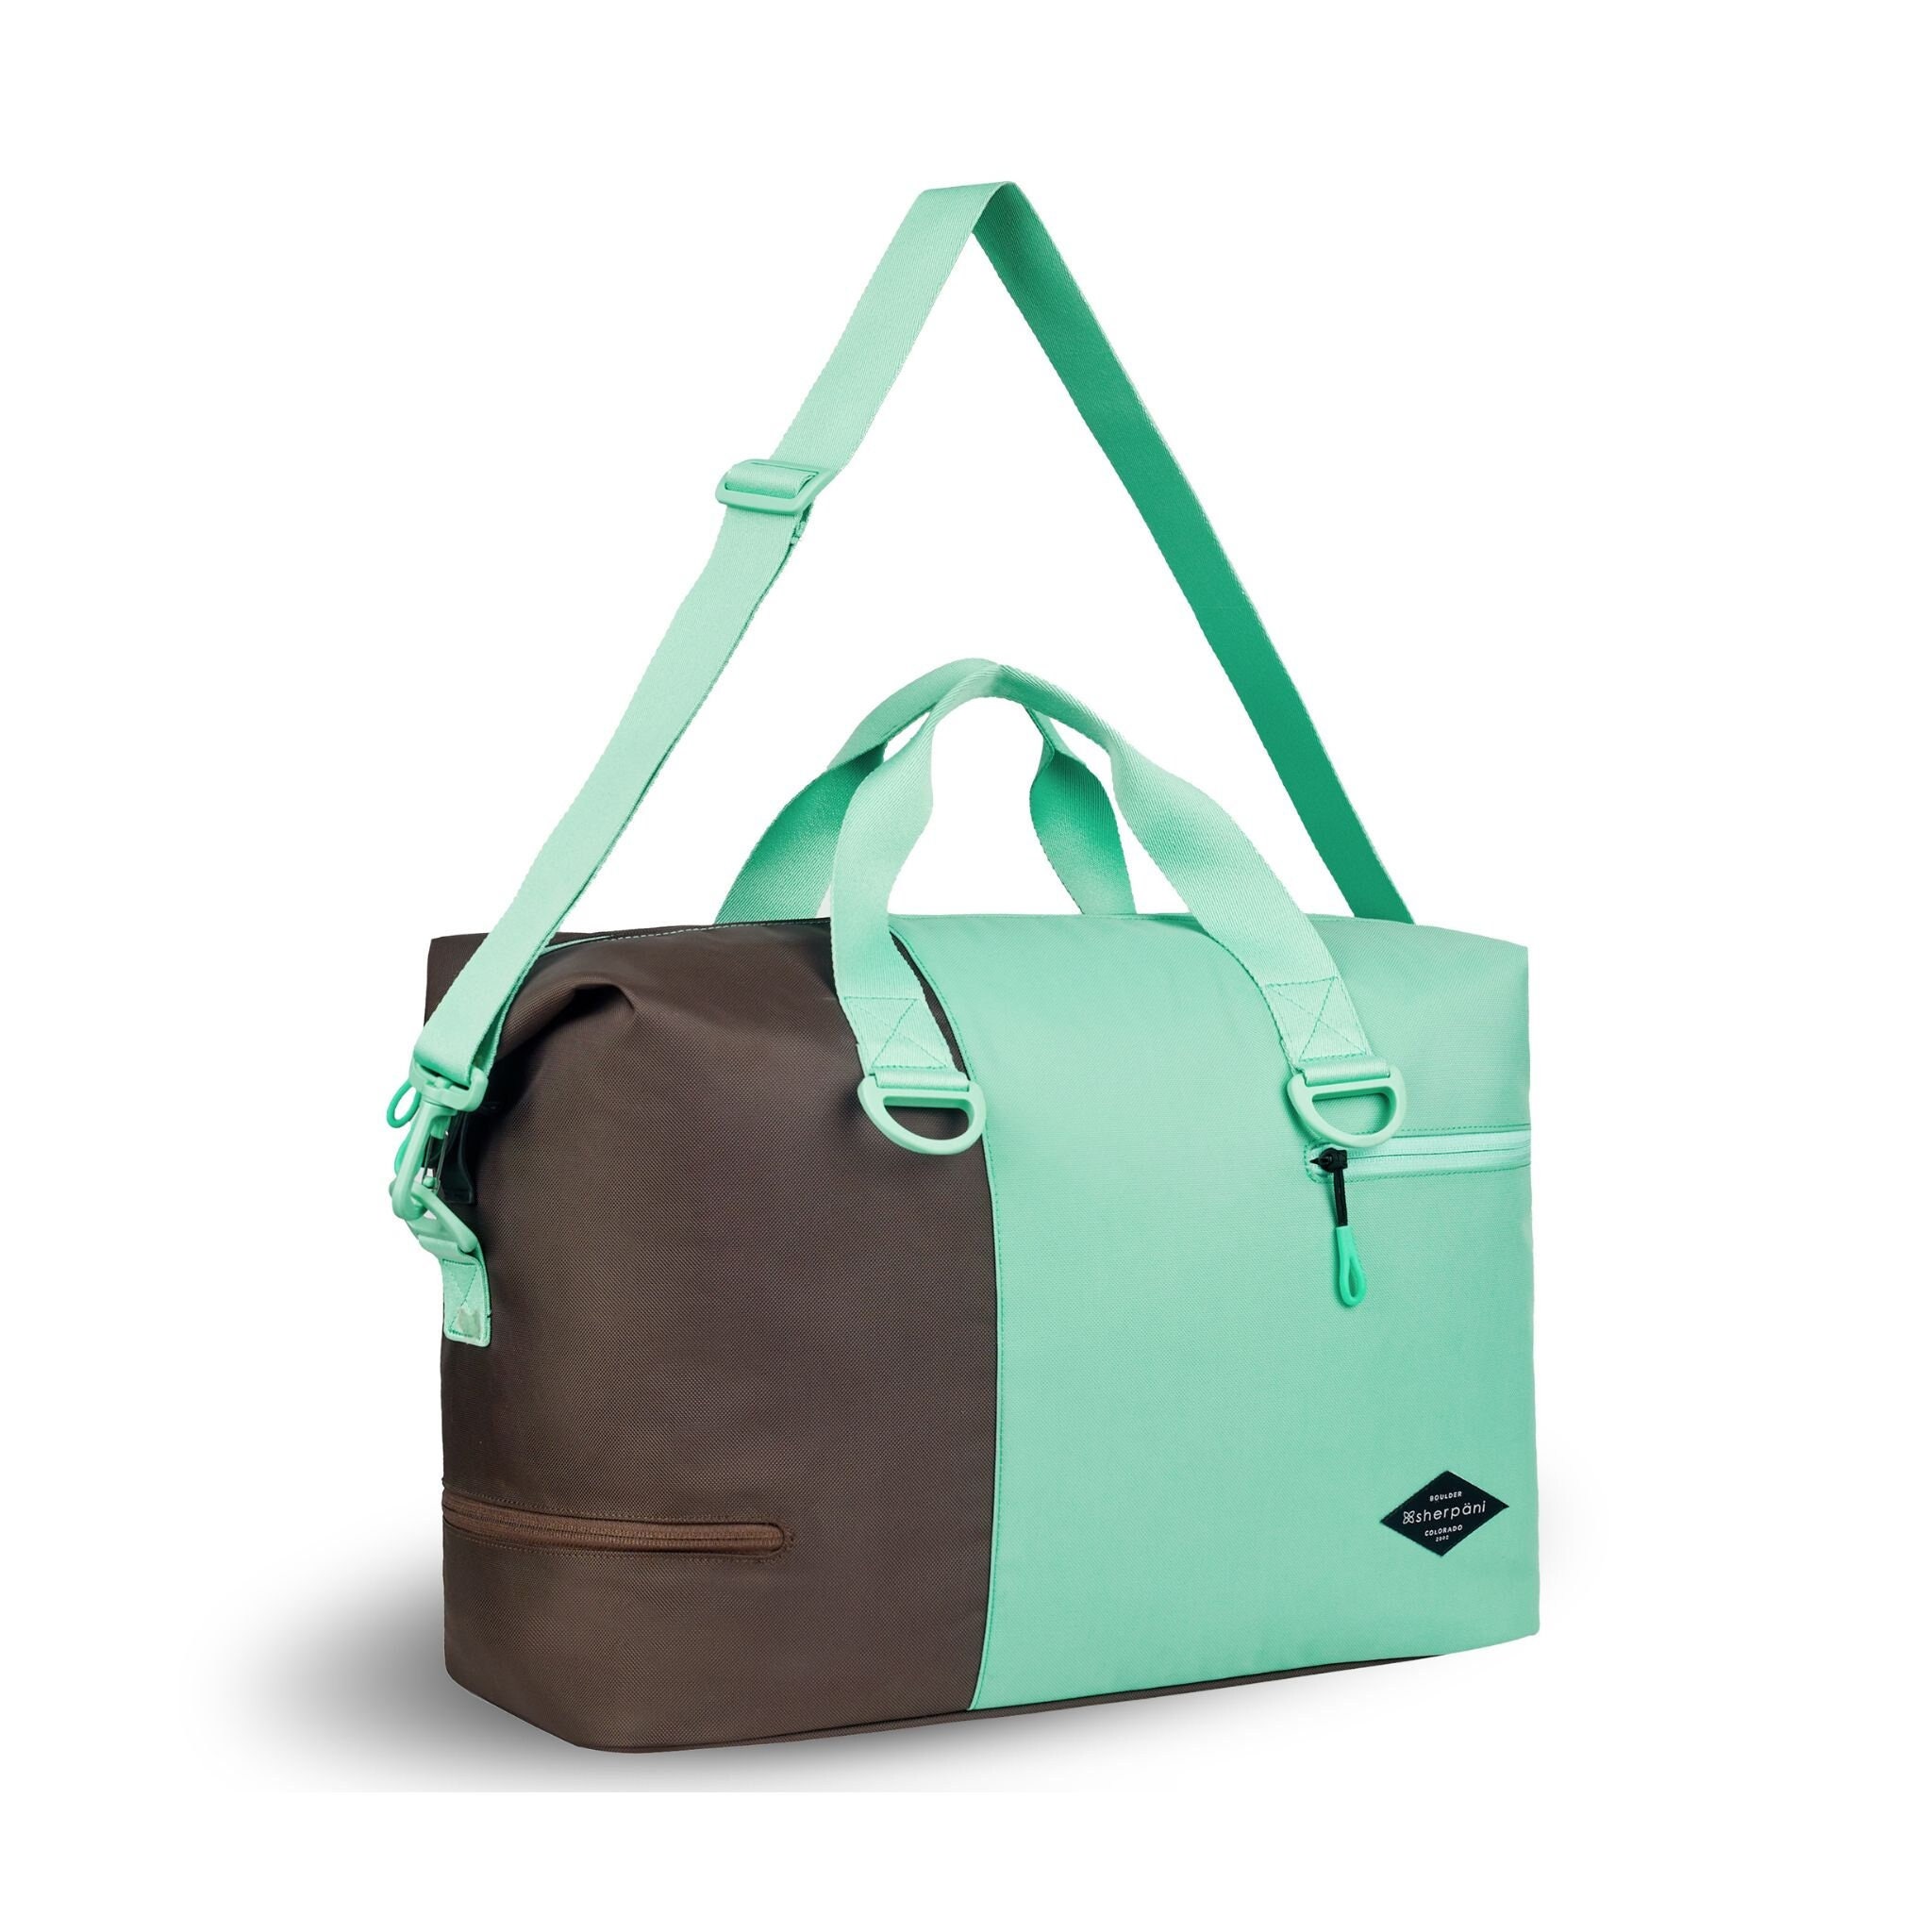 Goyard Gray Luggage ☑  Fancy bags, Luxury bags collection, Stylish luggage